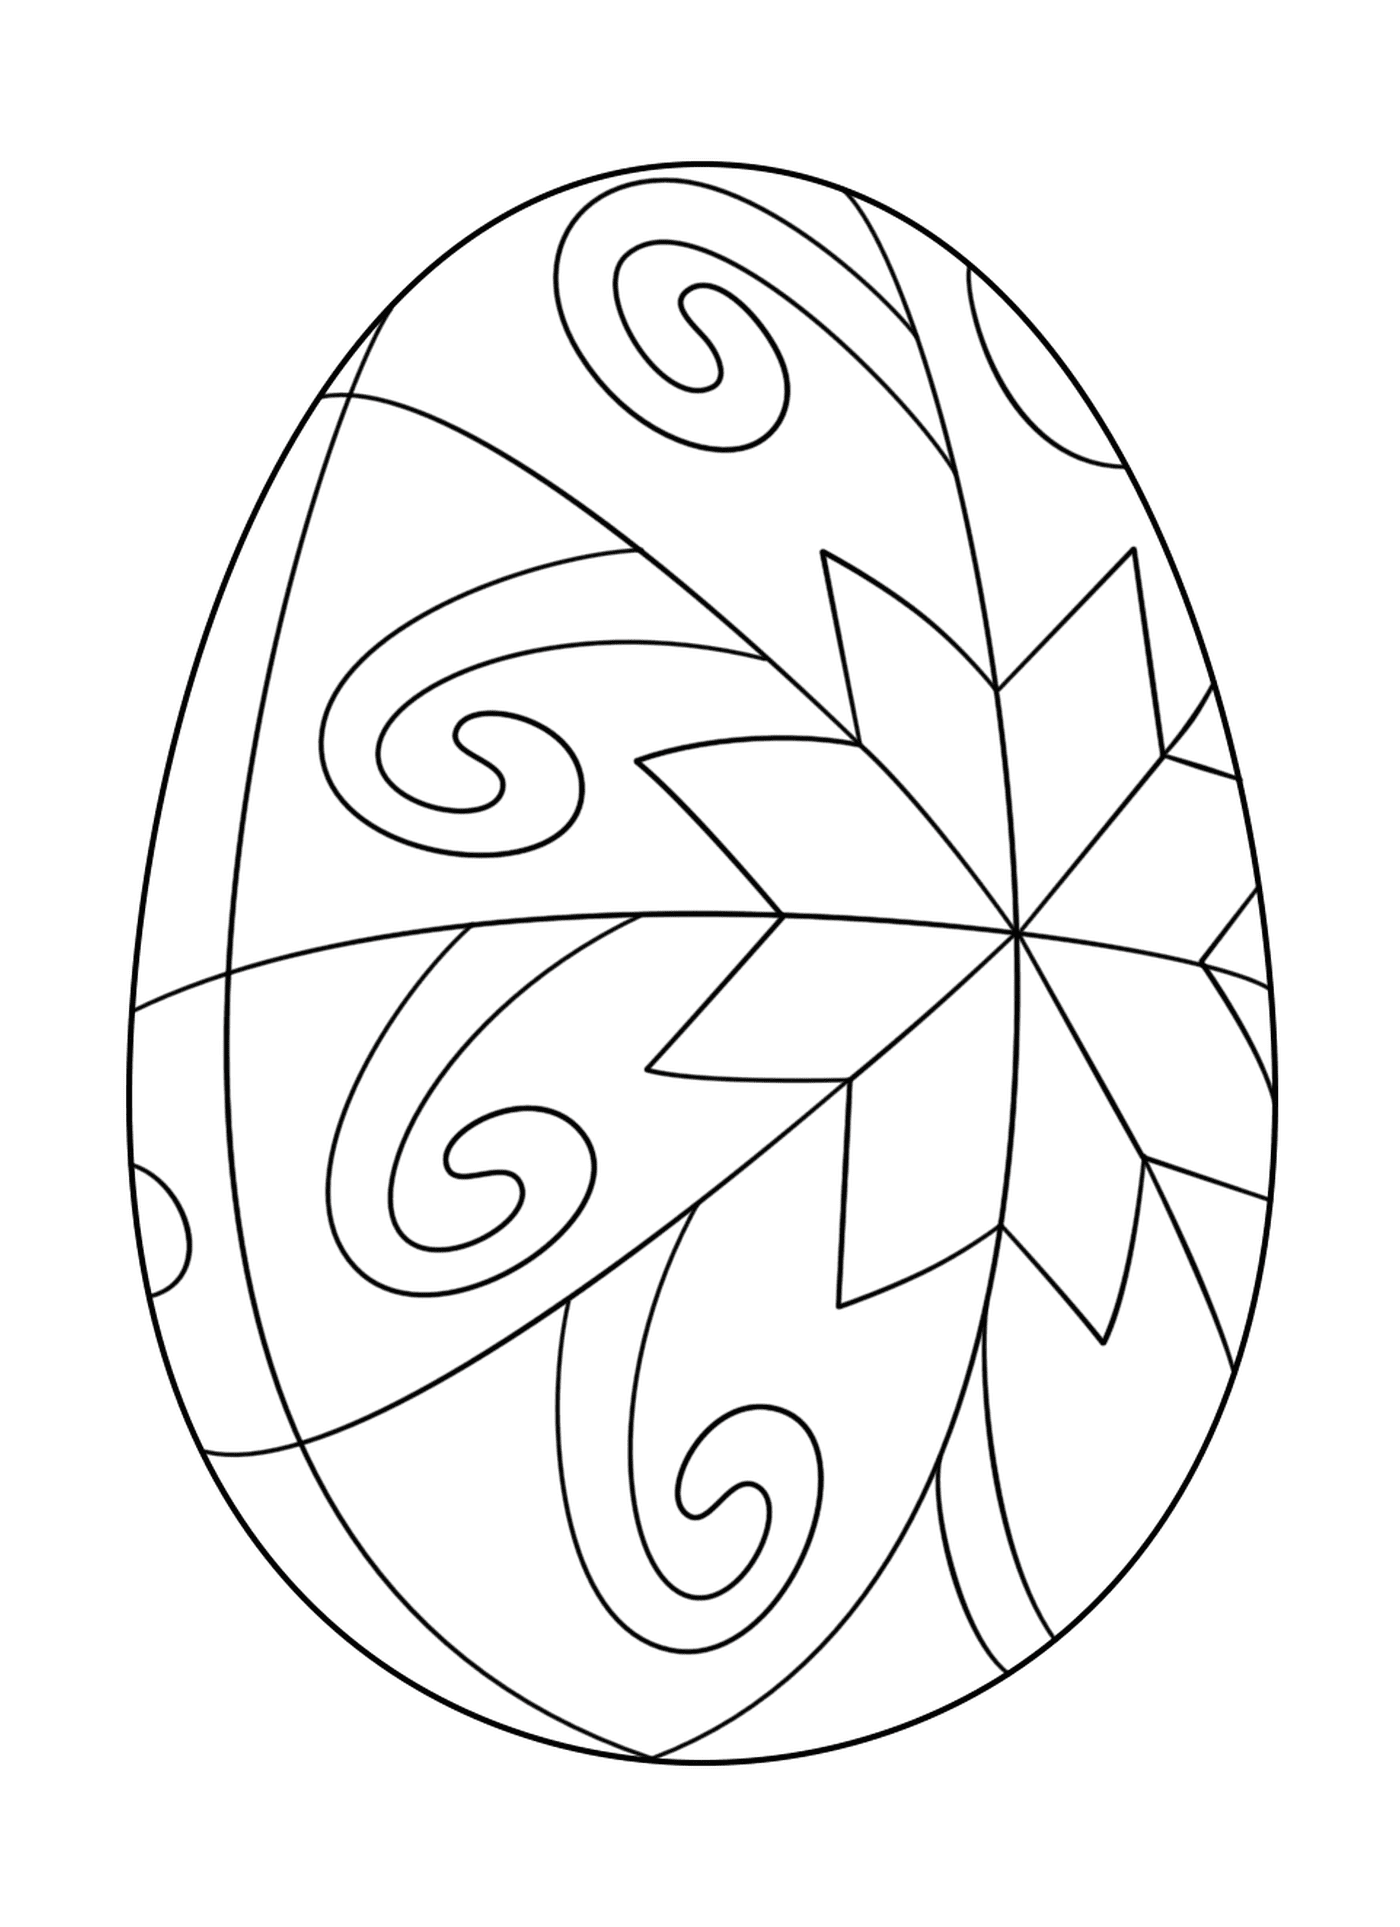  Huevo de Pascua con motivo estrella, huevo decorado 